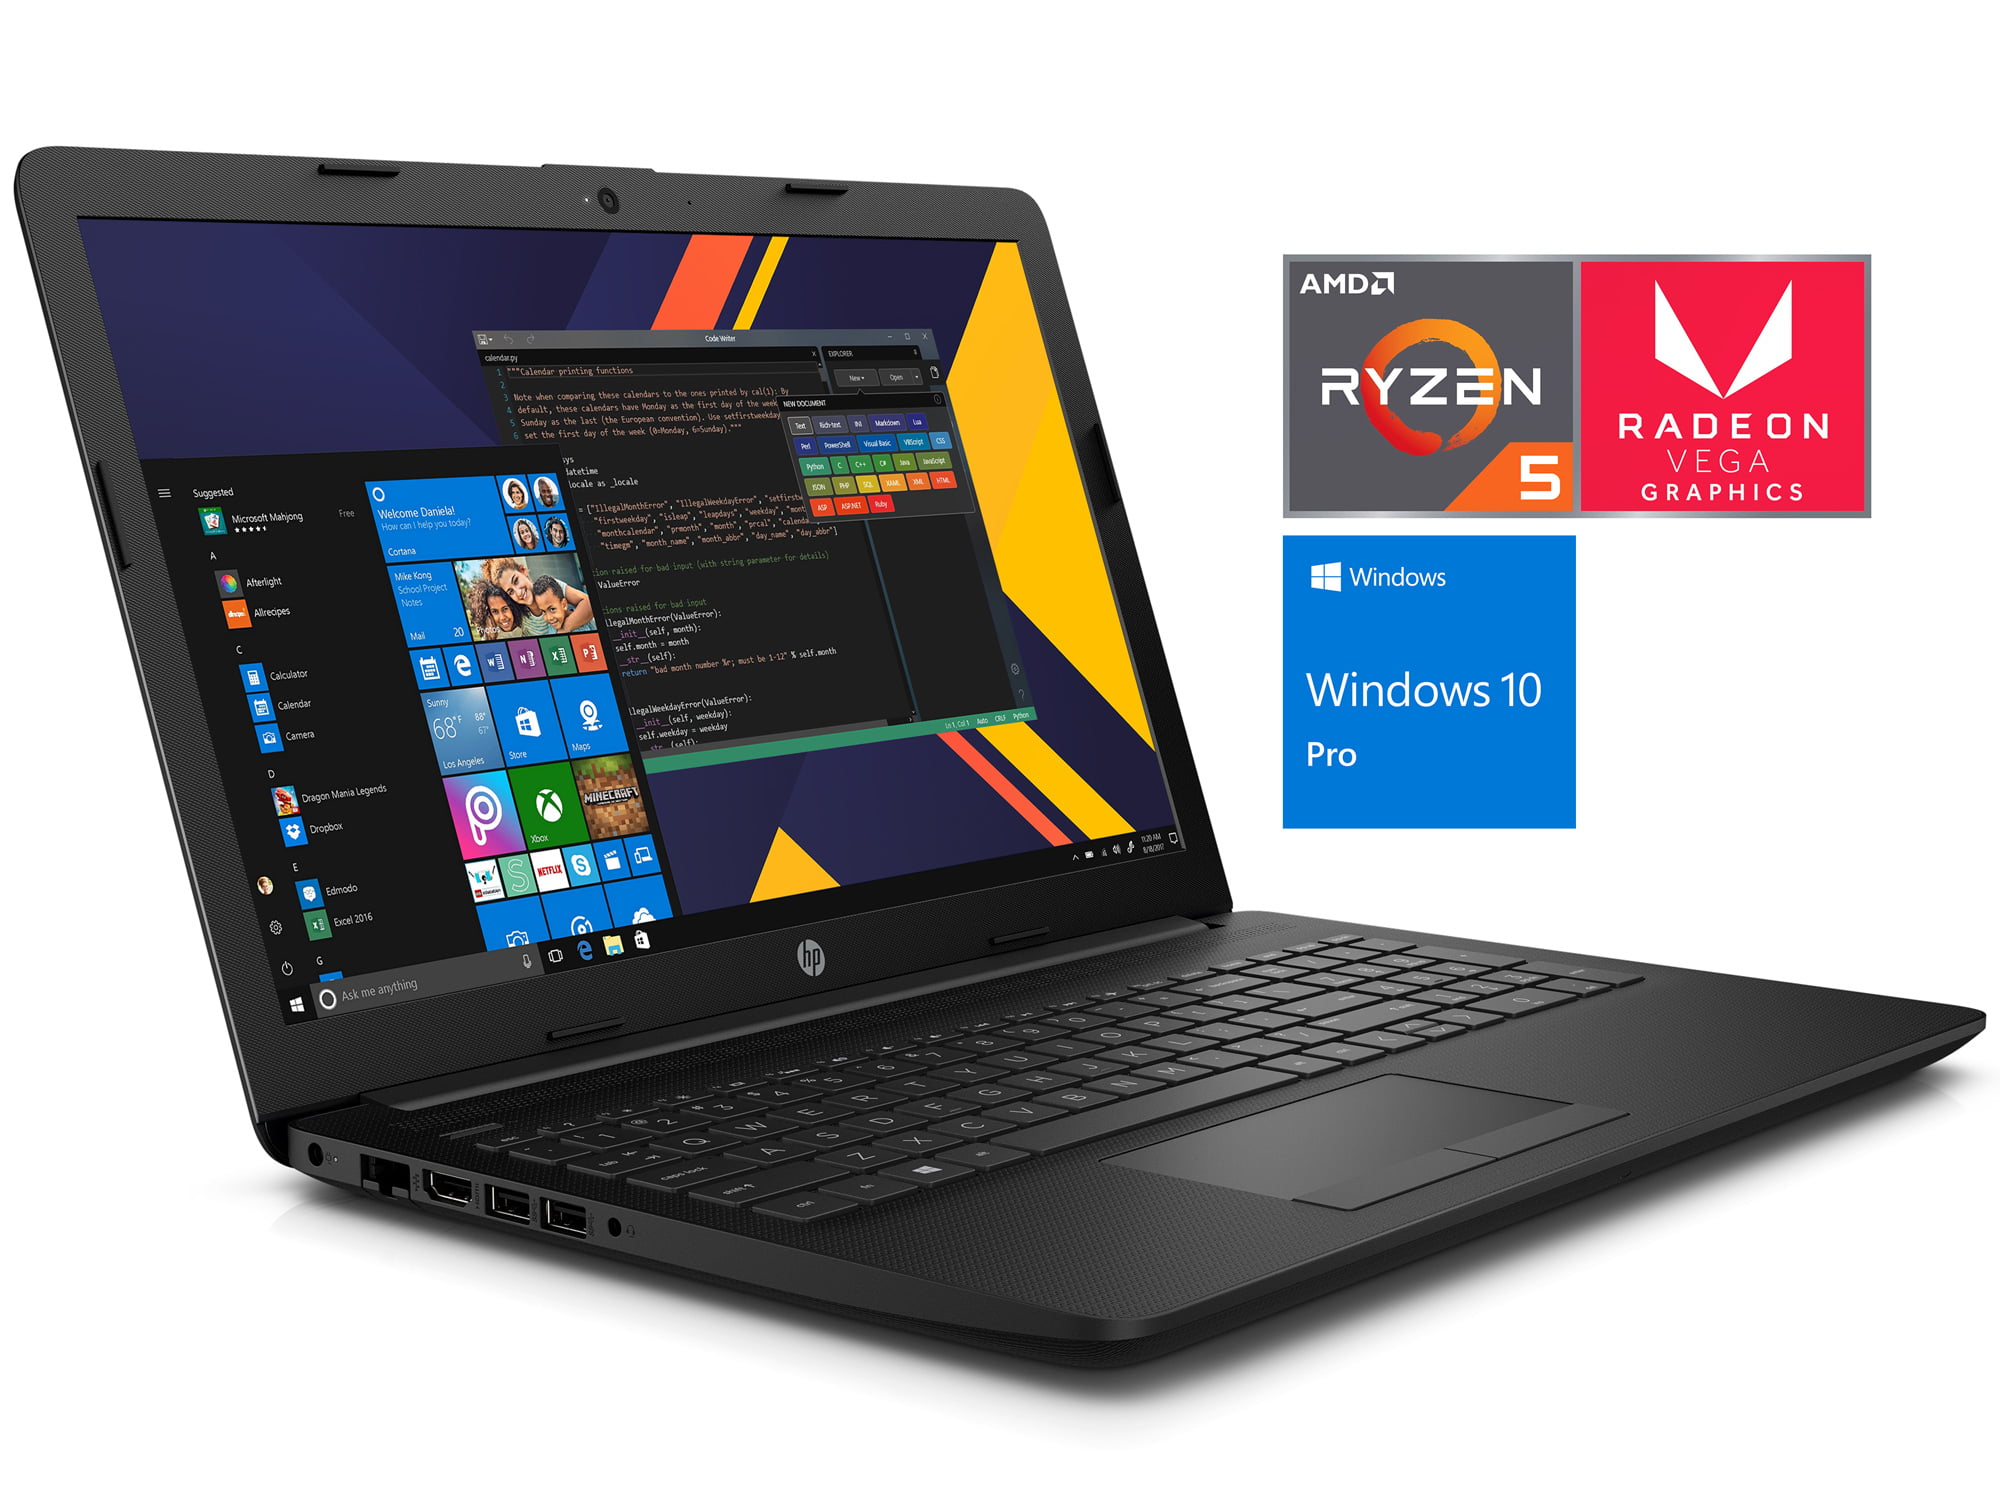 HP 15z Notebook, 15.6" HD Display, AMD Quad-Core Ryzen 5 2500U Upto 3